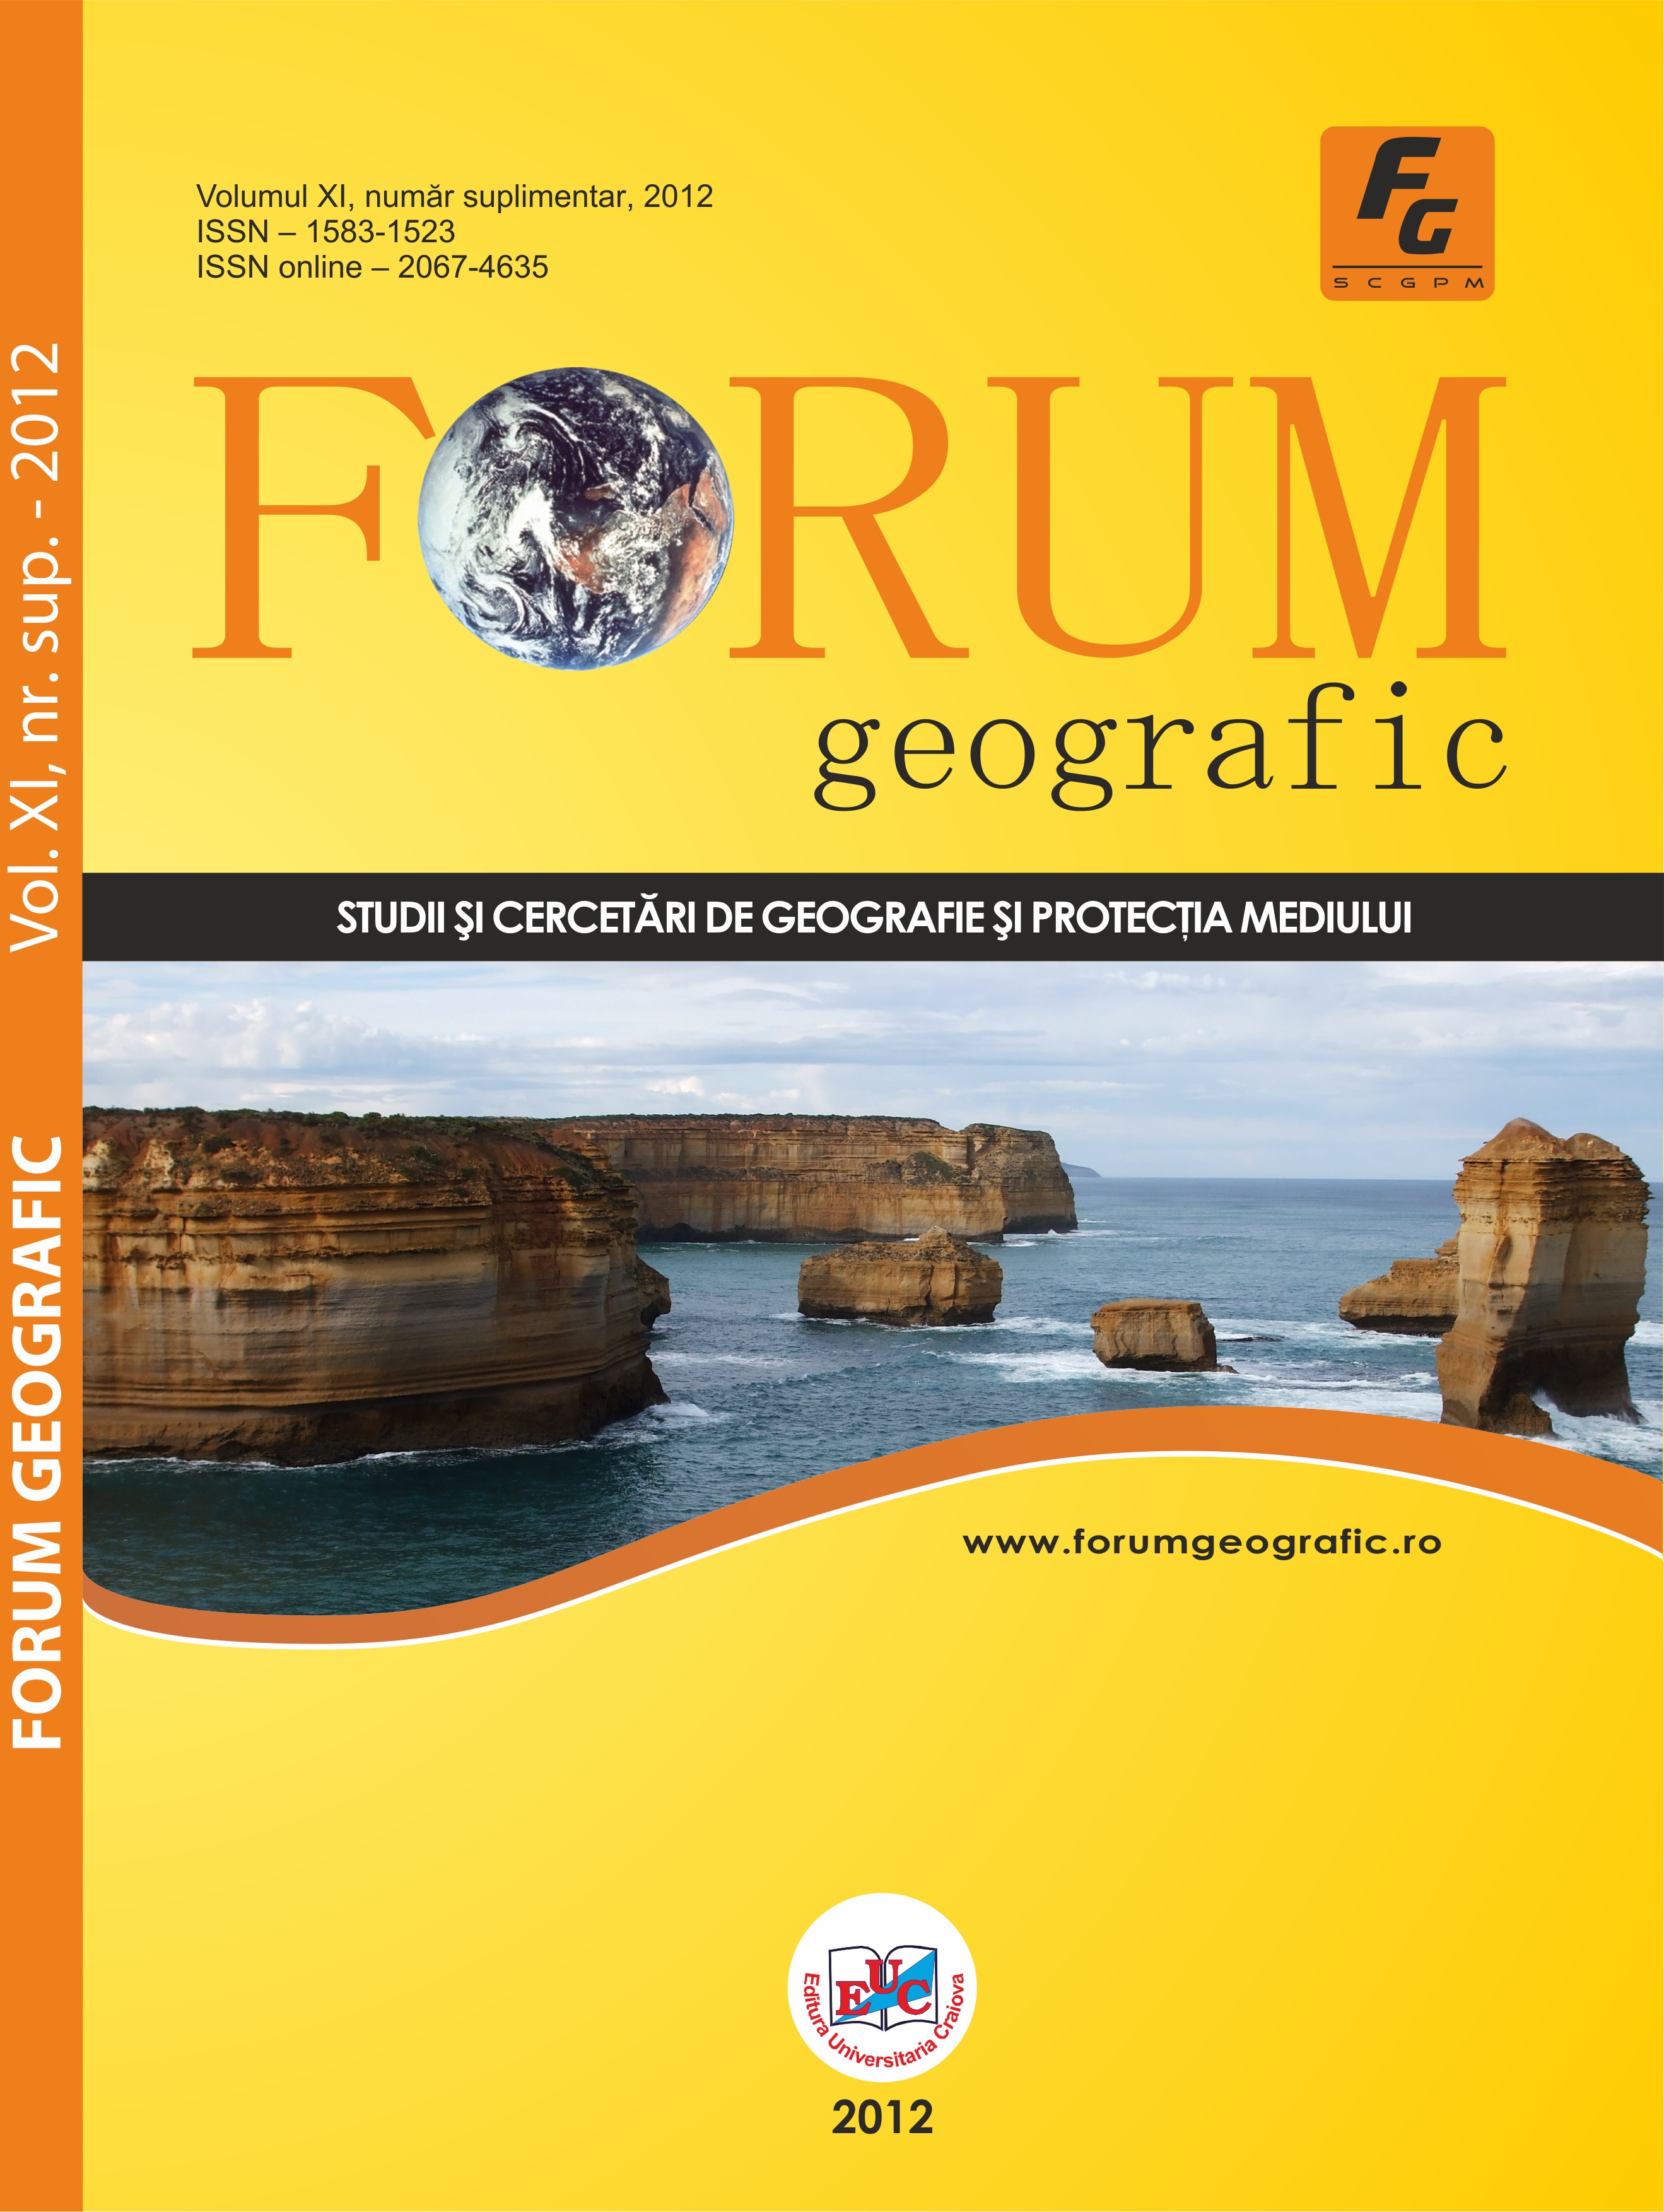 Forum geografic: Volume XI, supplement 1